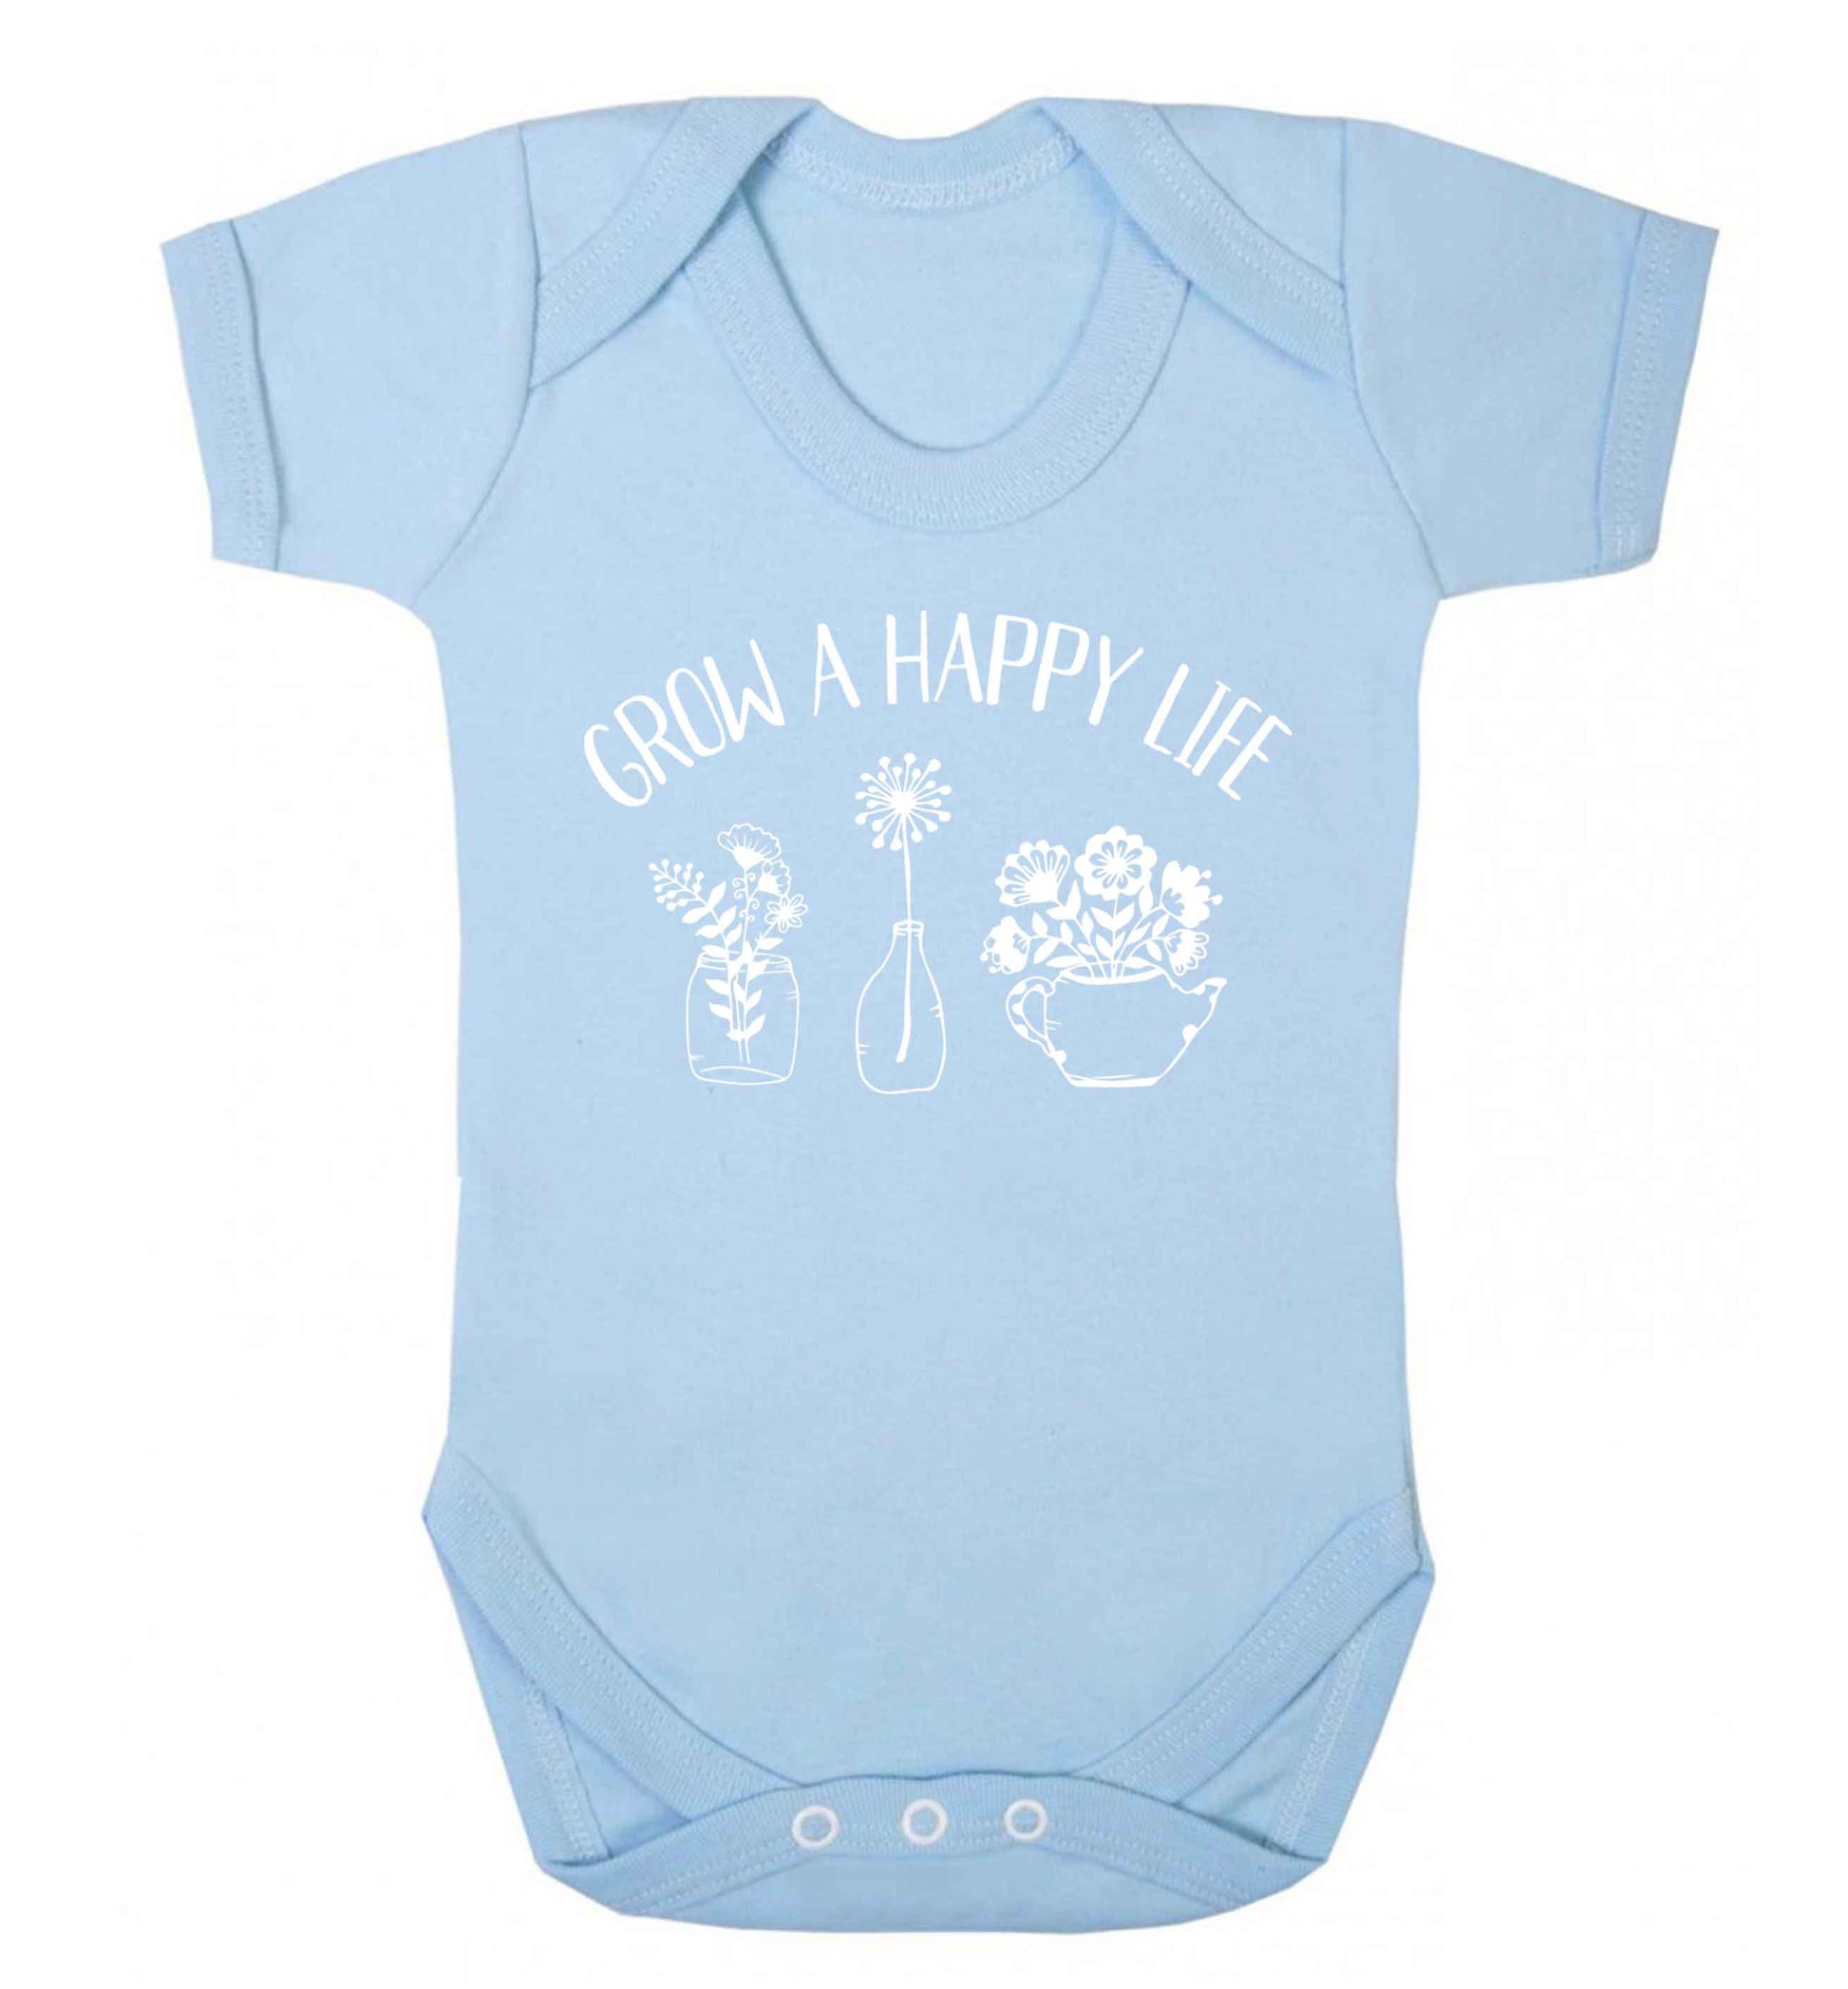 Grow a happy life Baby Vest pale blue 18-24 months